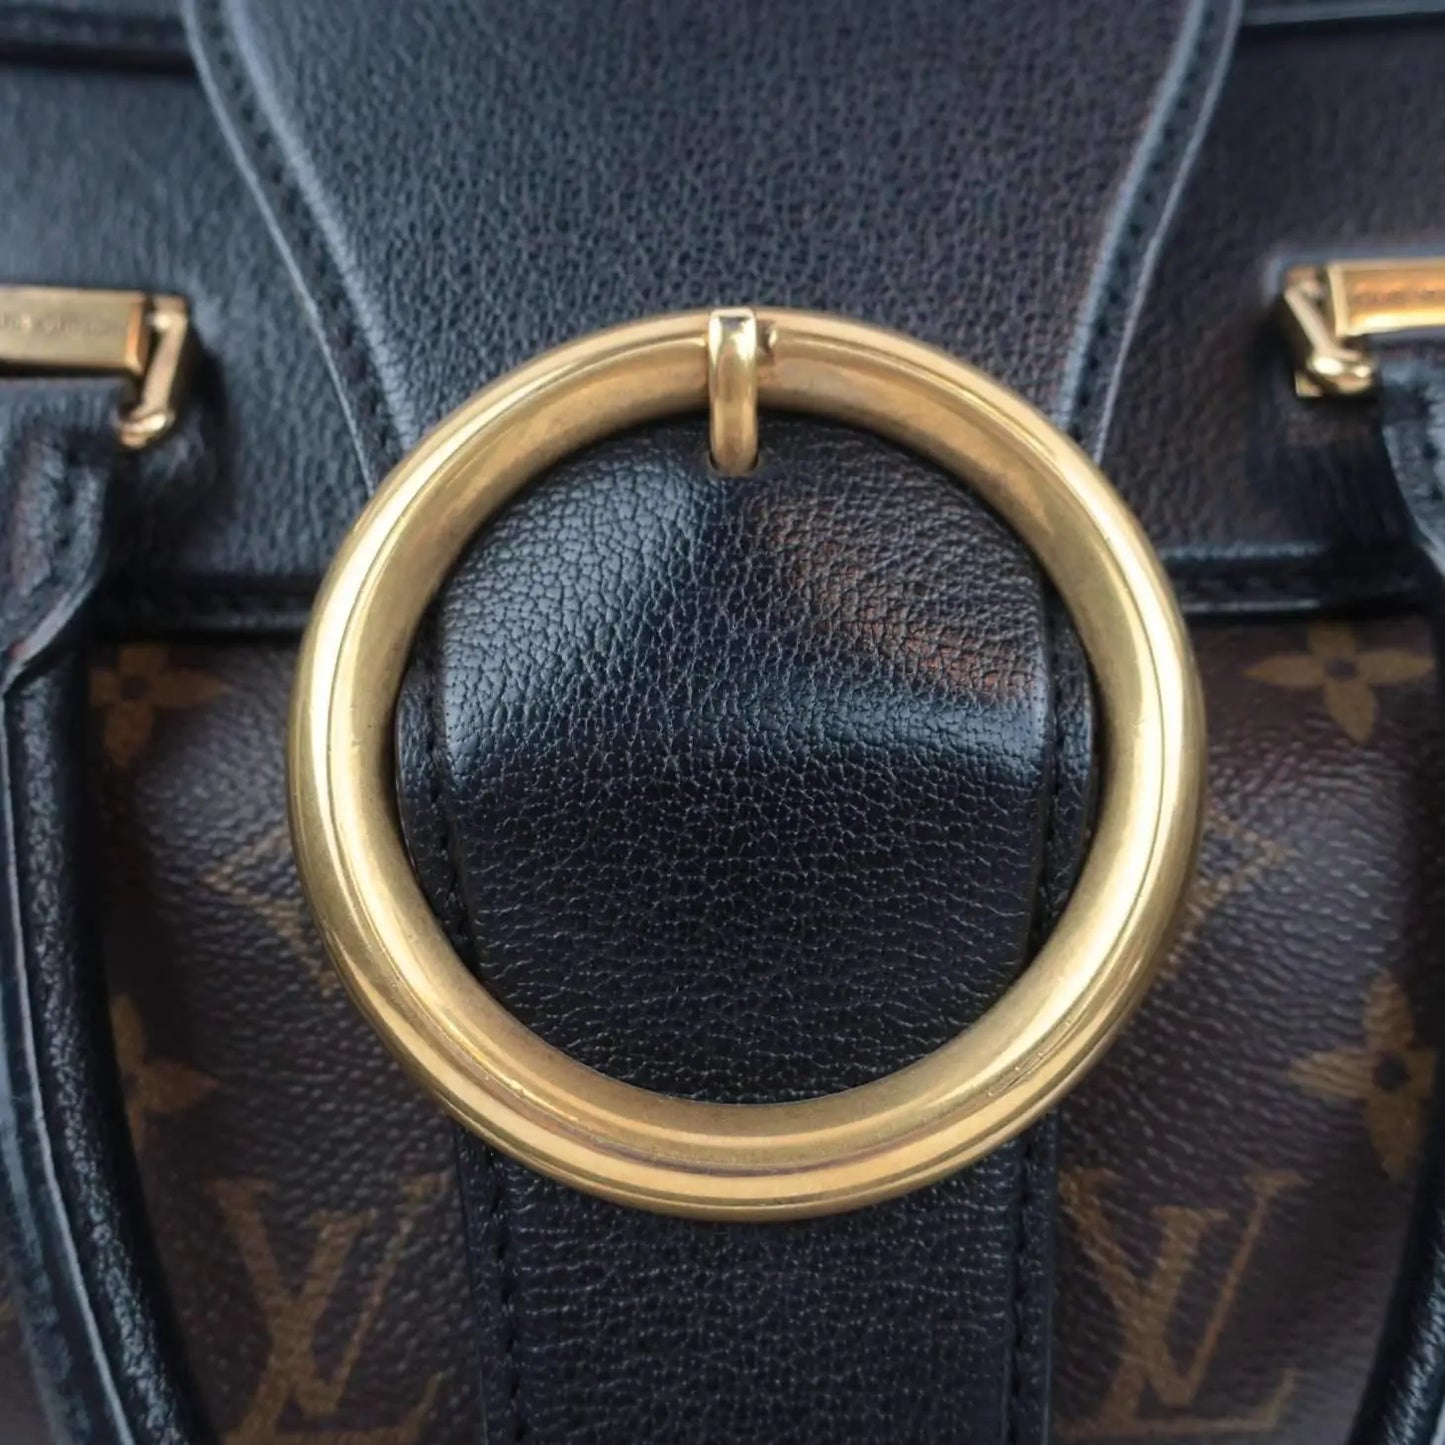 Louis Vuitton Black Monogram Canvas and Leather Limited Edition Golden  Arrow Speedy Bag Louis Vuitton